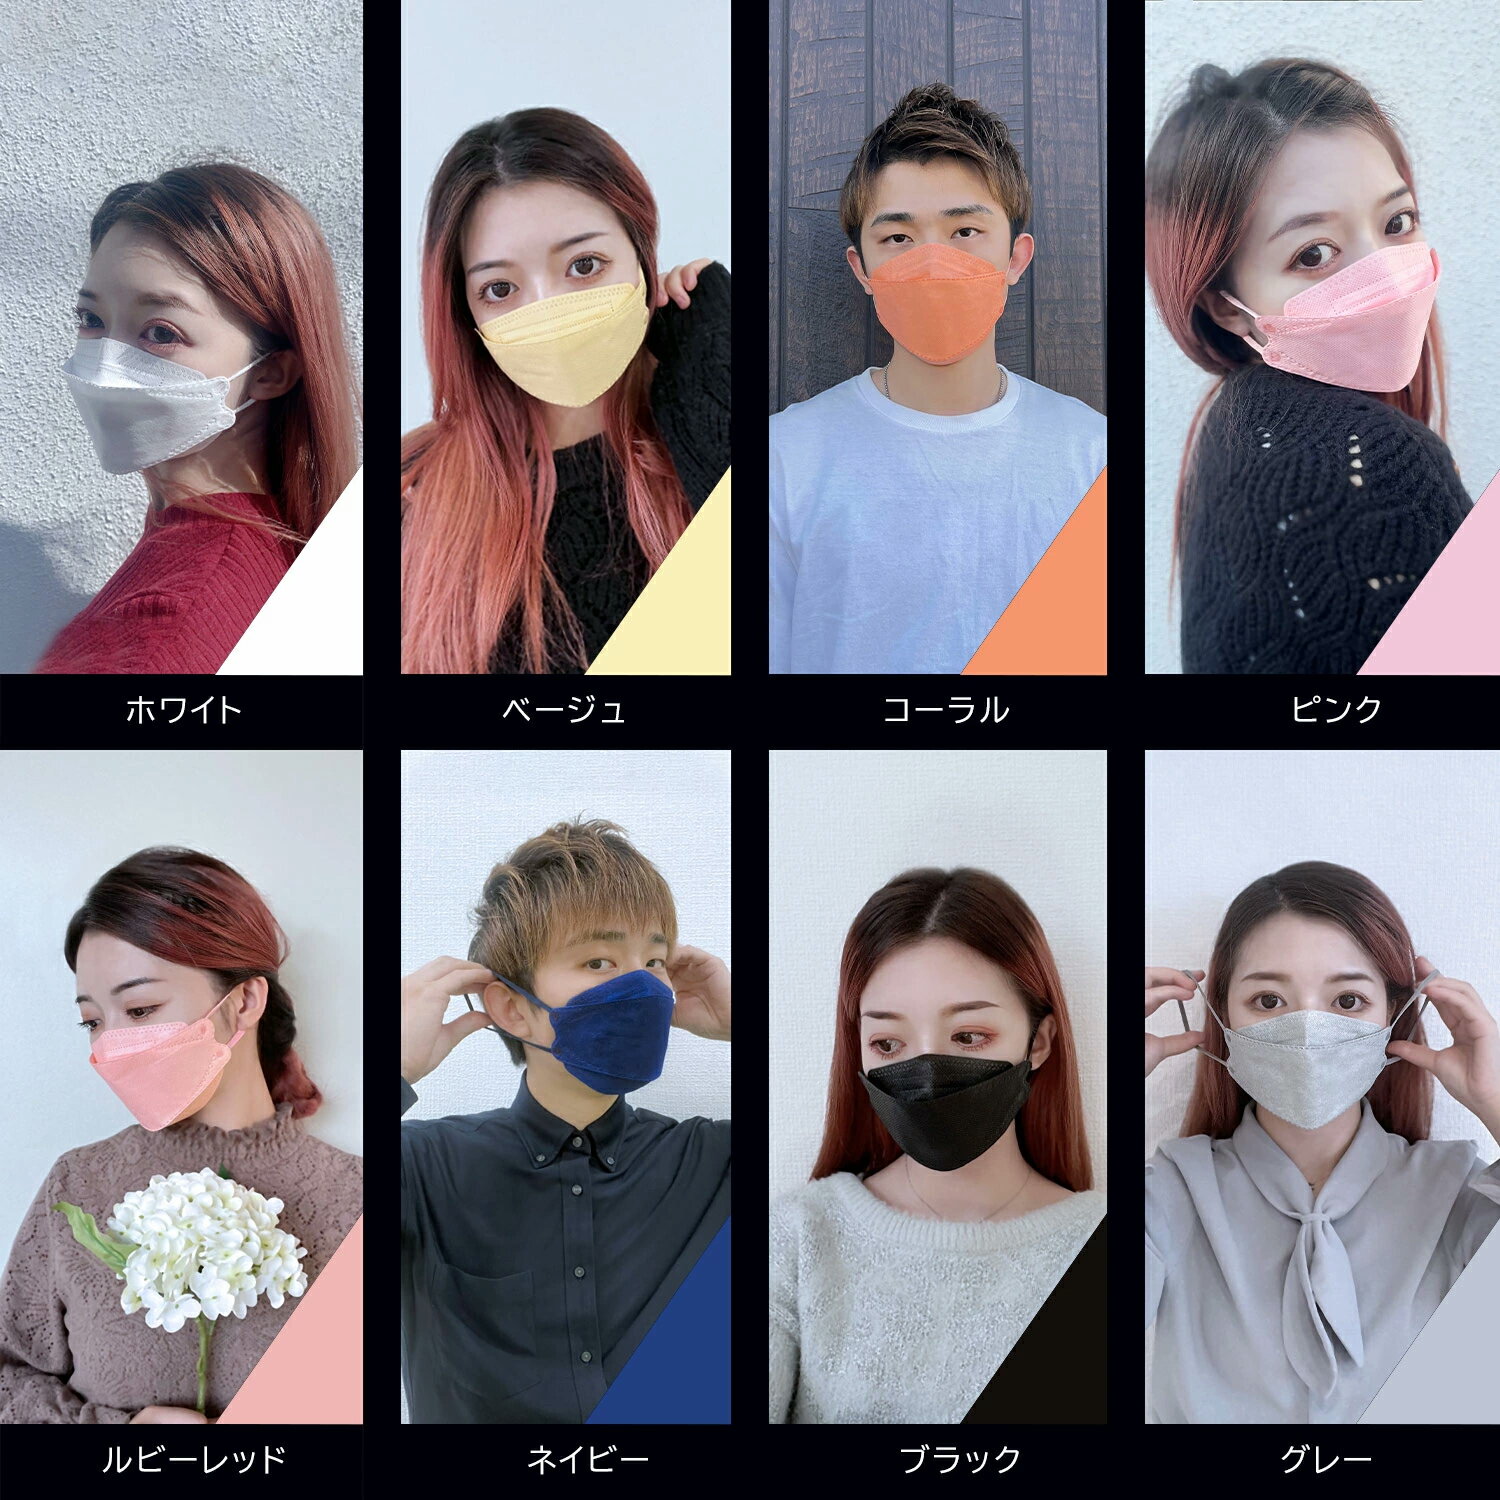 jn95マスク 日本製 3d立体型マスク 30枚入 カラーマスク 個包装 大人用 4層構造 使い捨て 密封ラッピング包装 不織布マスク jn95 3dマスク A-3-30